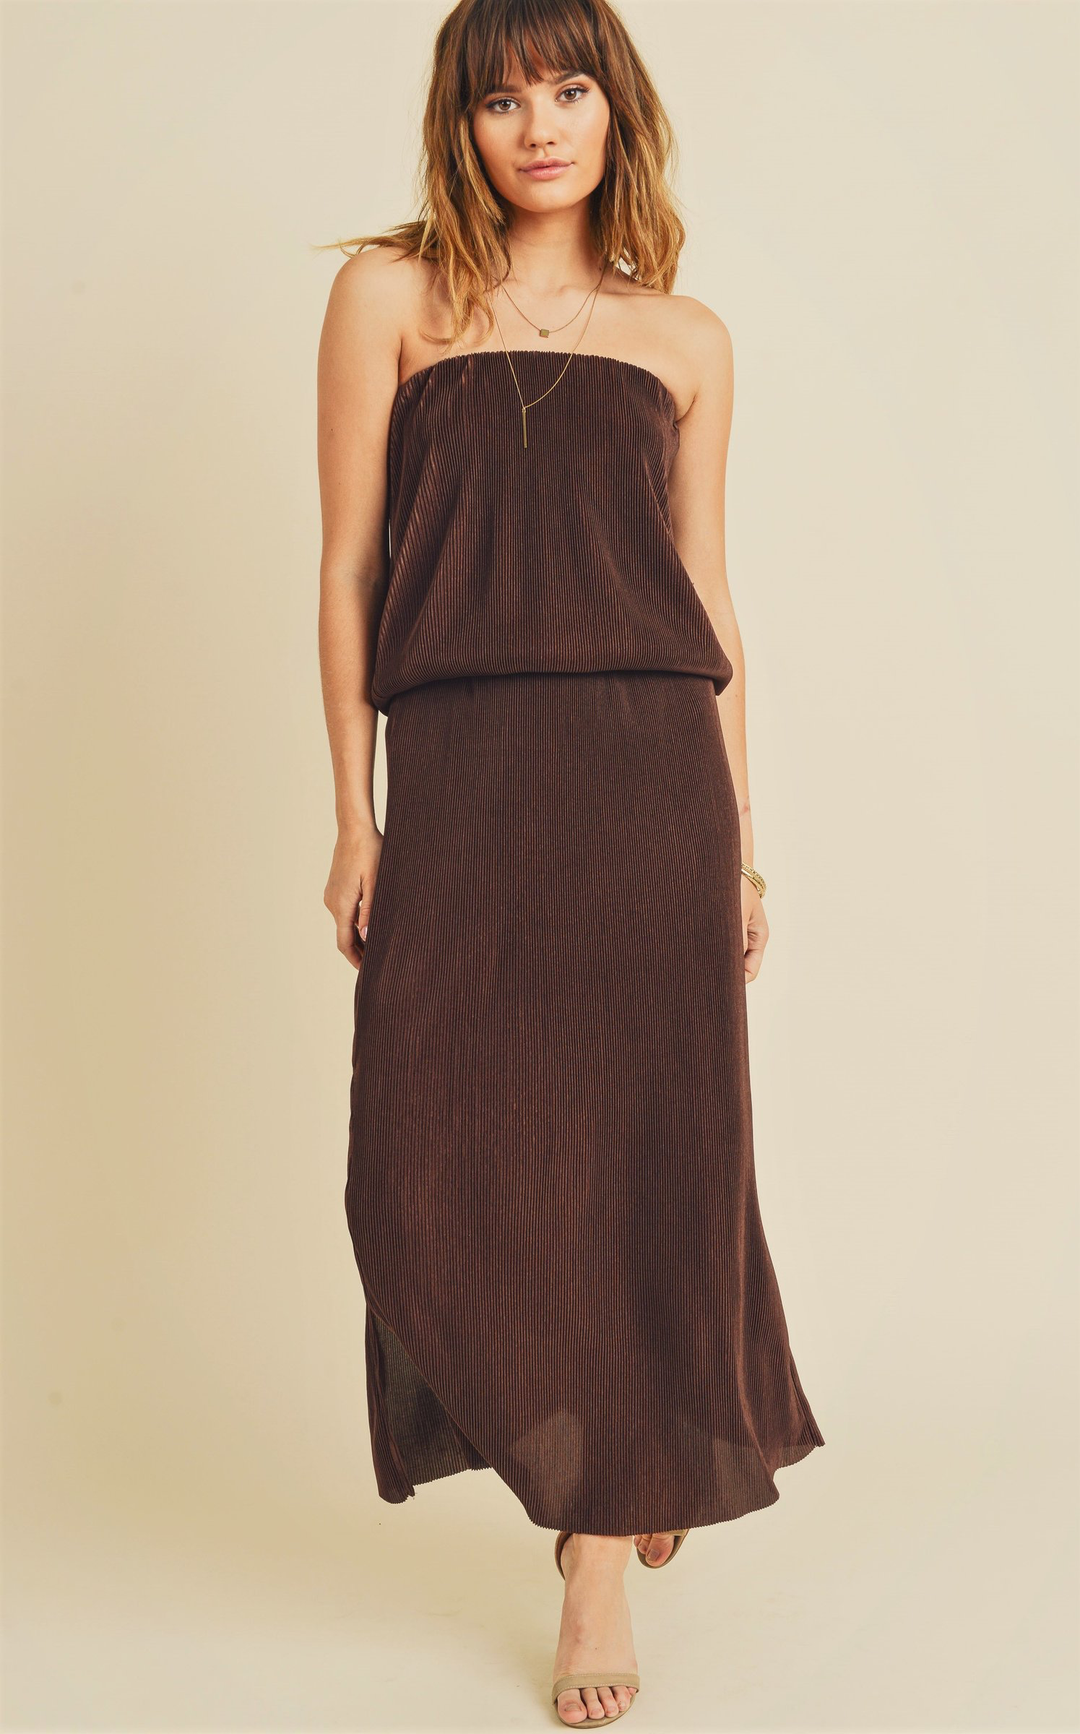 Willow Dress - Dark Brown - Kingfisher Road - Online Boutique